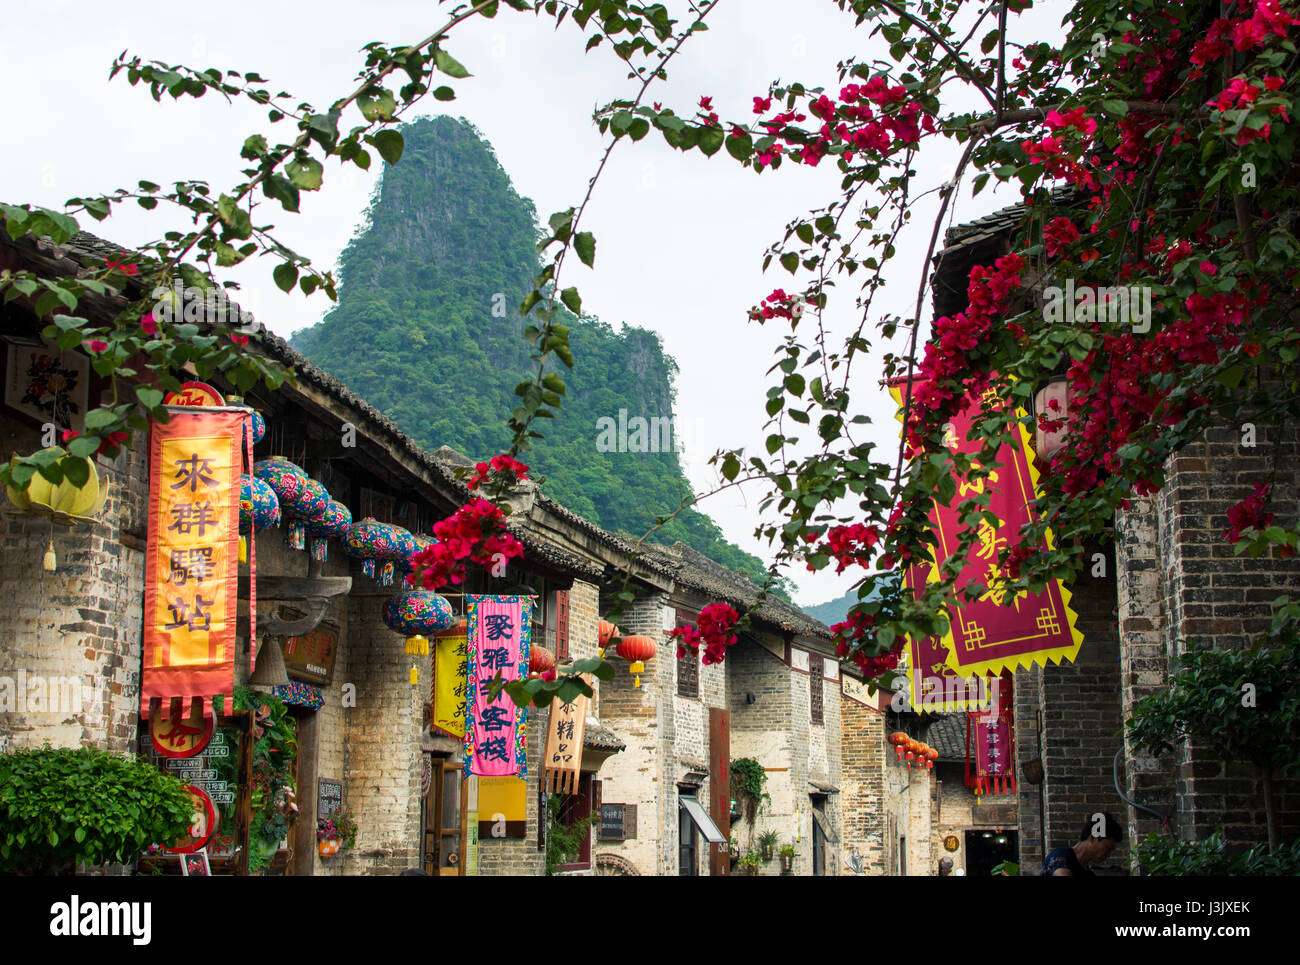 Hangzhou, Chine - 2 mai 2017 : Huang Yao, ville ancienne de Zhaoping county, province du Guangxi. Architecture et décoration chinoise traditionnelle Banque D'Images